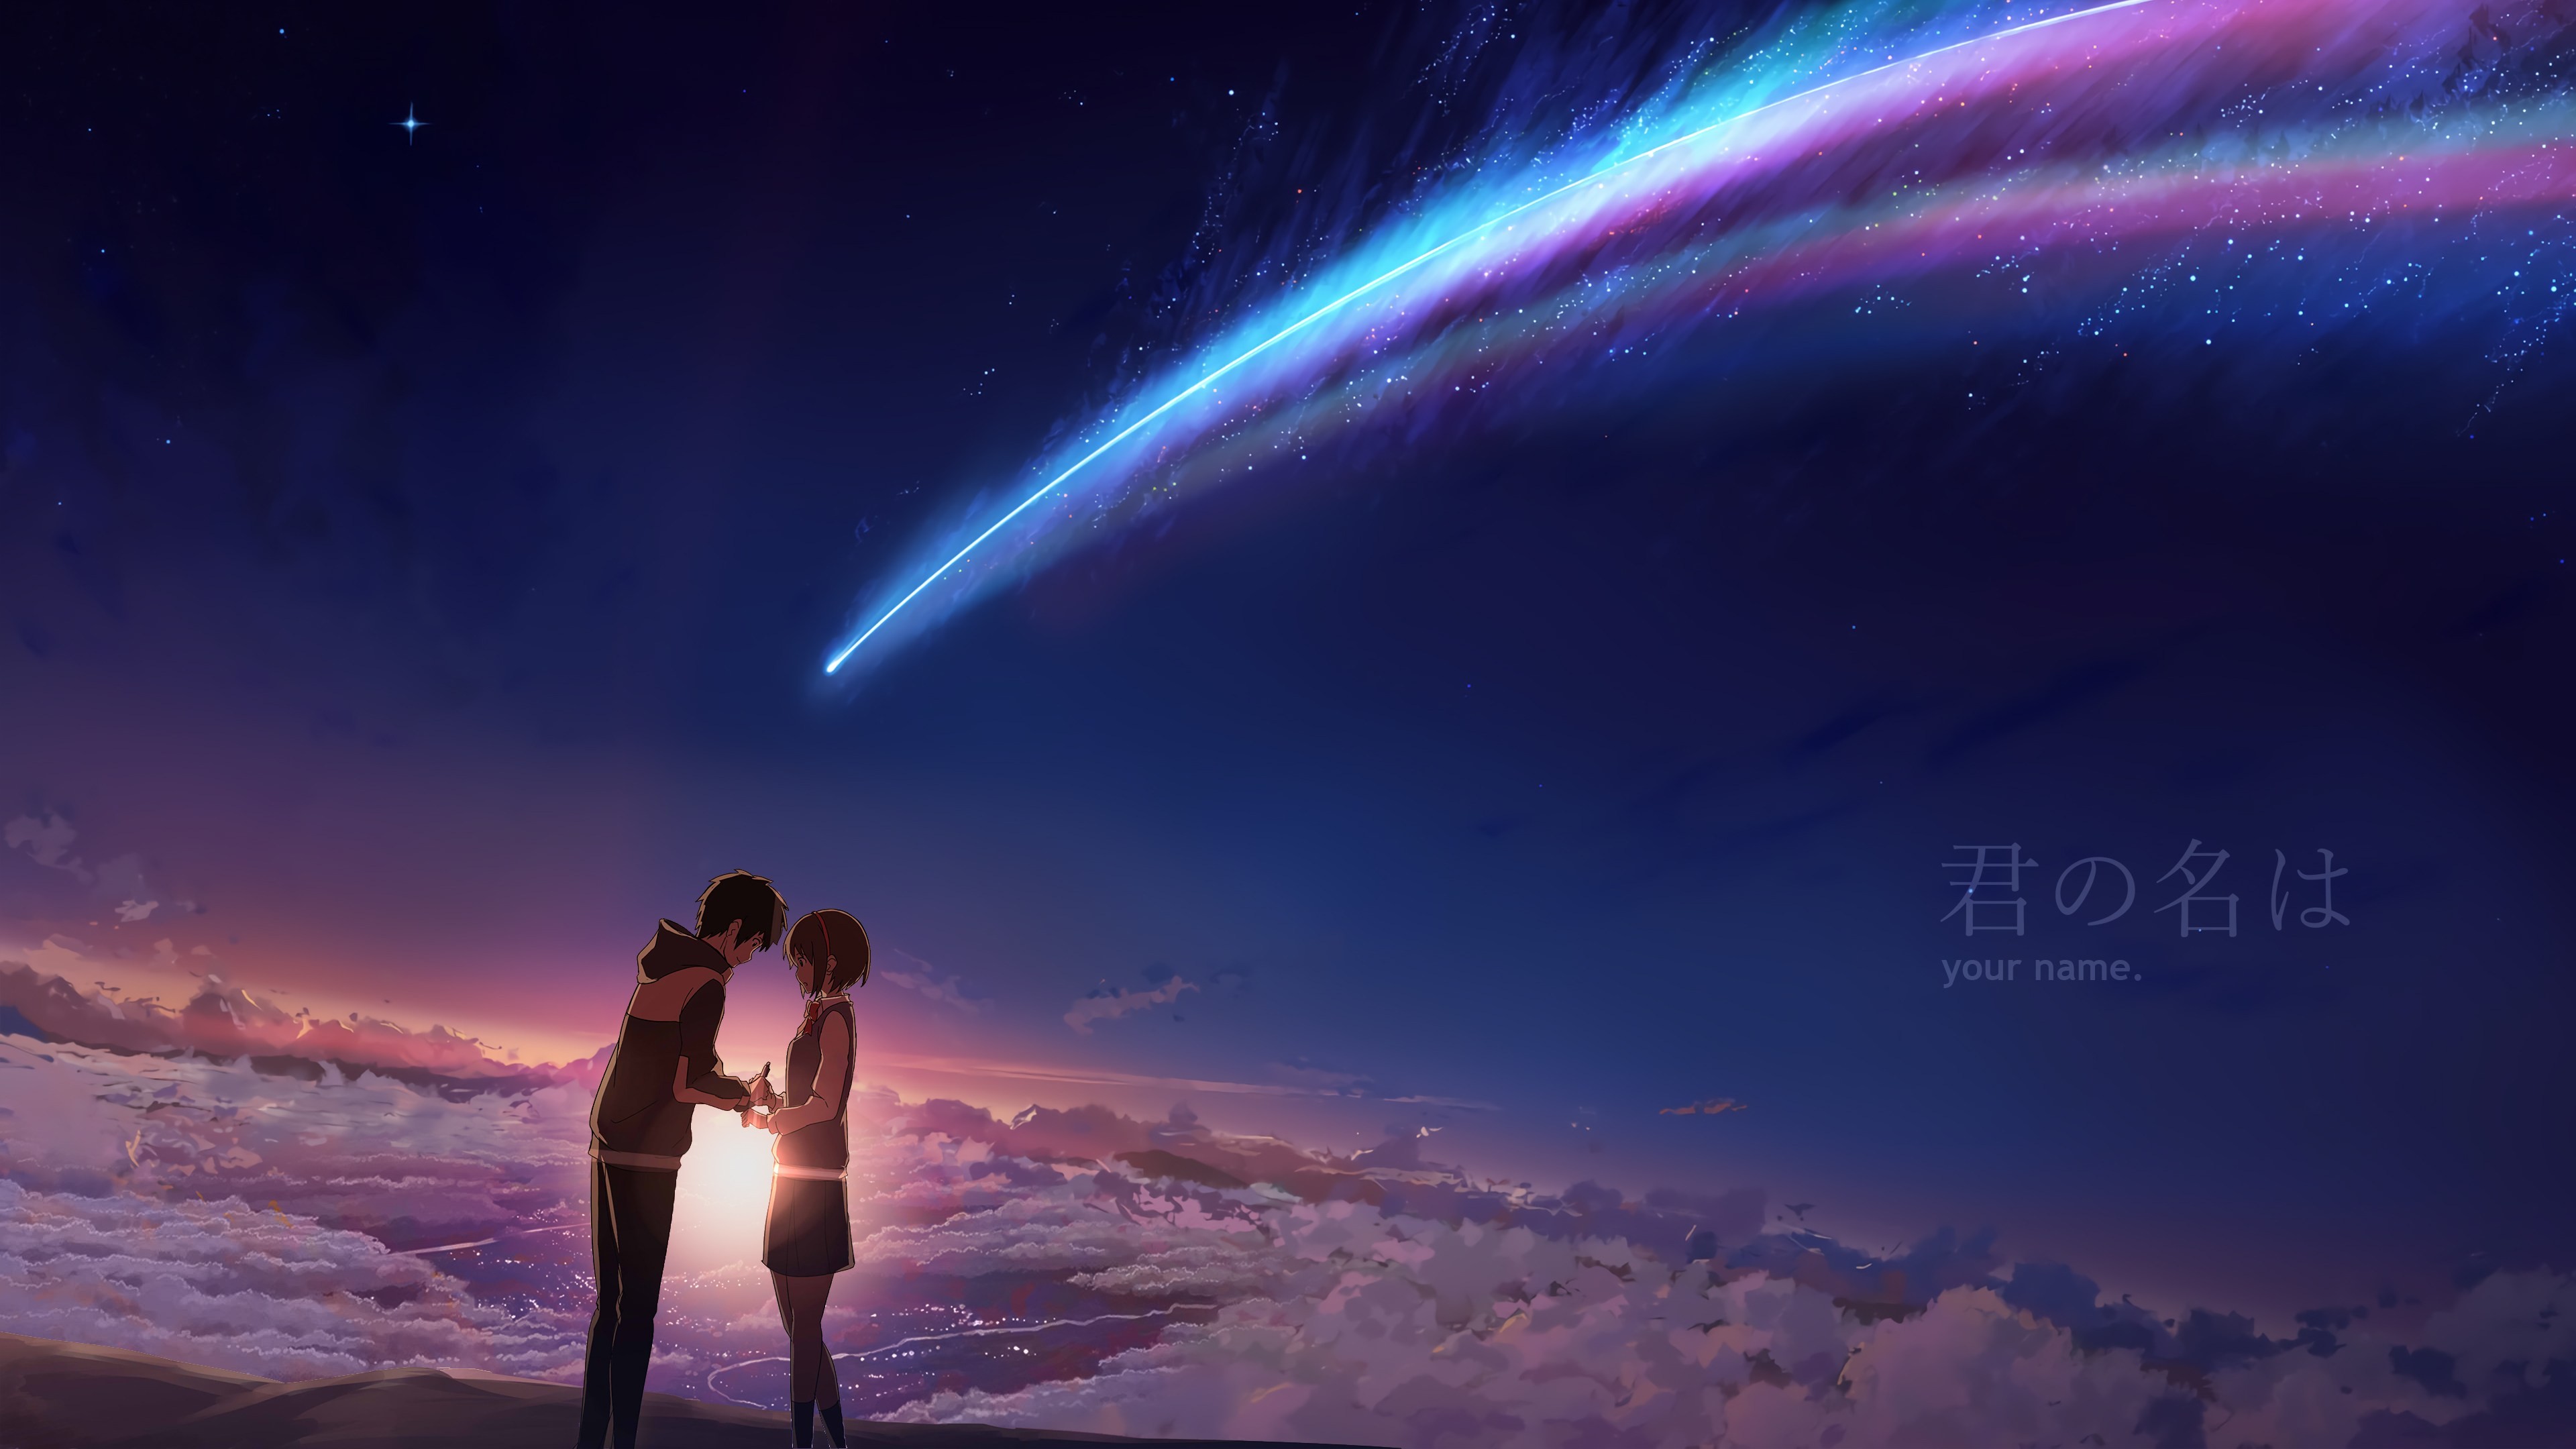 1082x1922px  free download  HD wallpaper Romantic love couple tears 2017  Anime Poster 4K Ul women sky  Wallpaper Flare